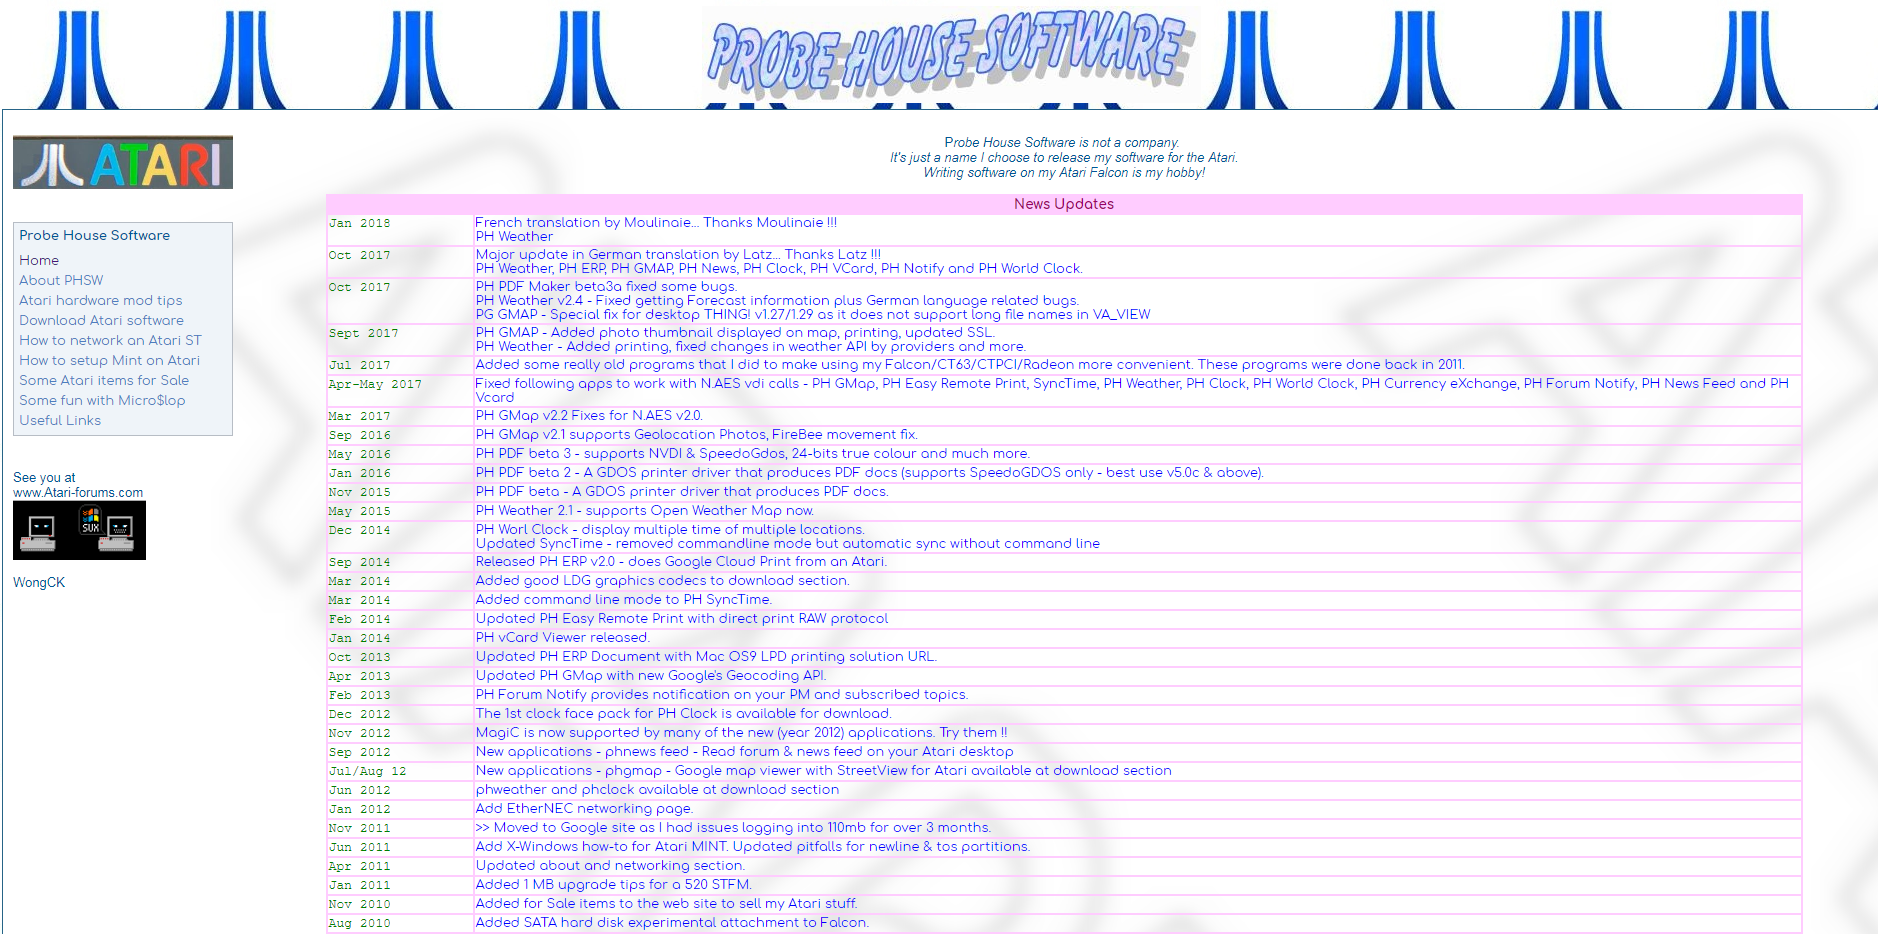 Screenshot of the website Probe House Software